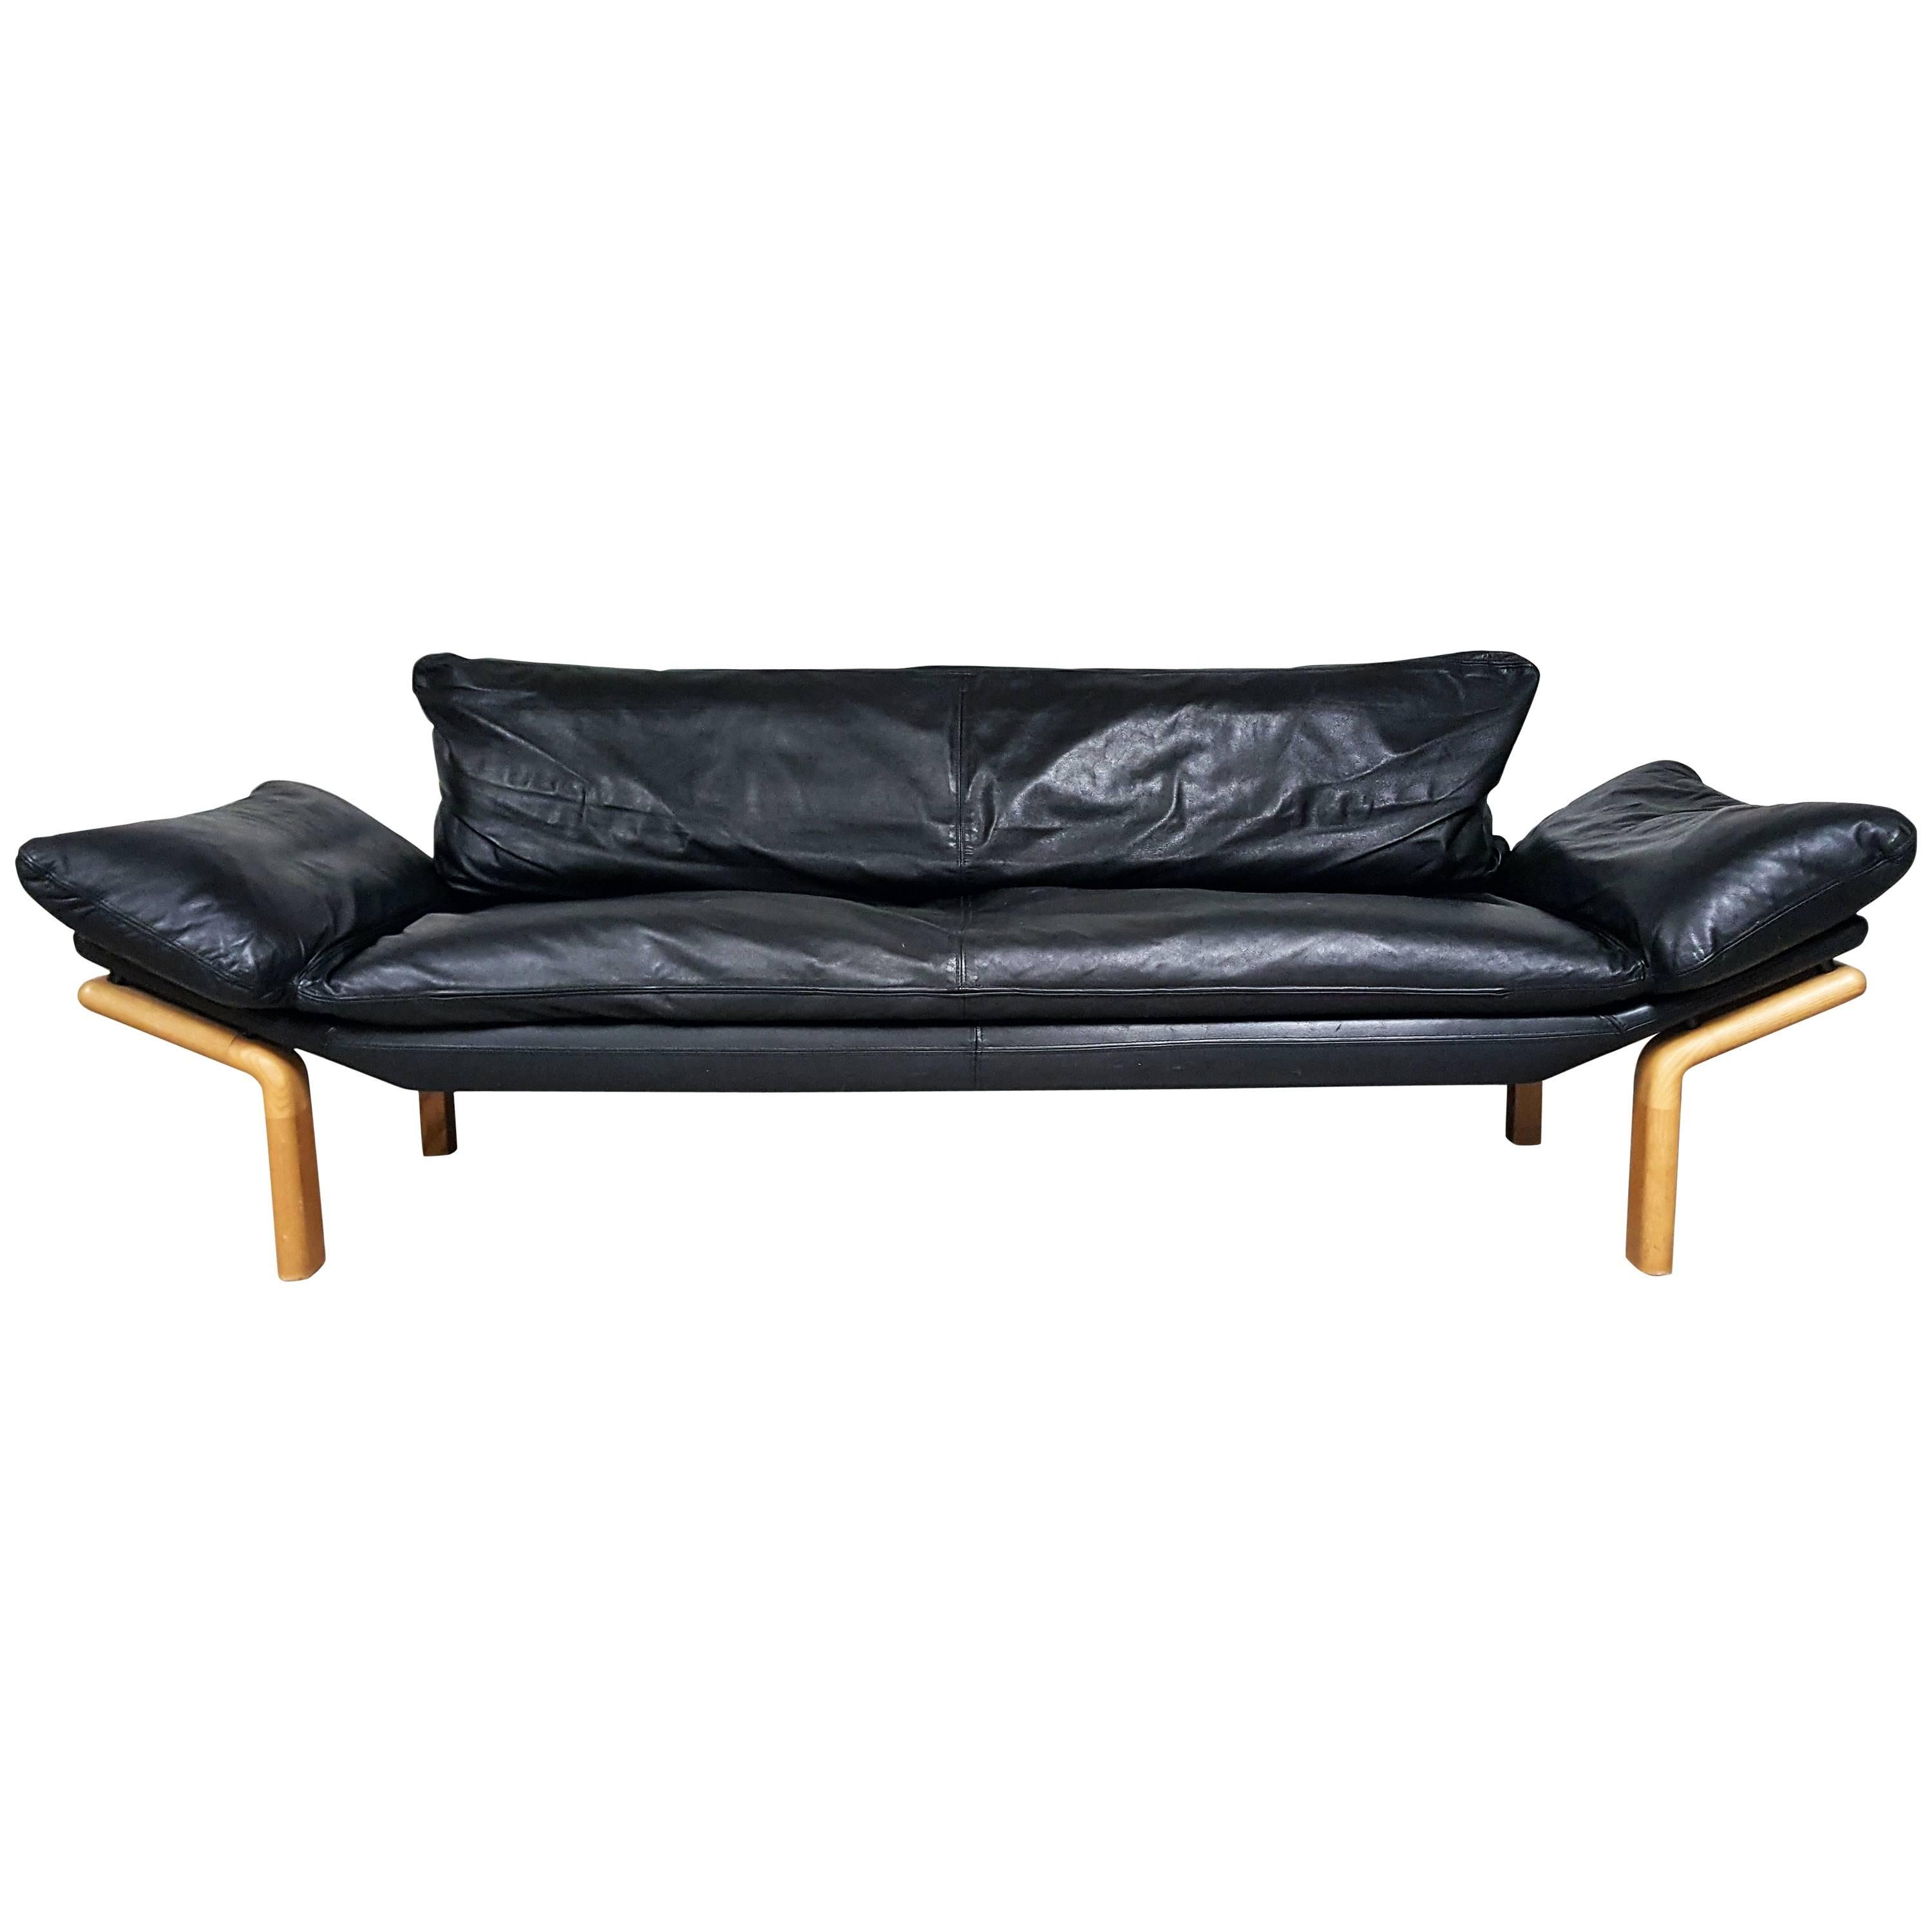 Mid-Century Danish Modern Sofa by Komfort in Black Leather